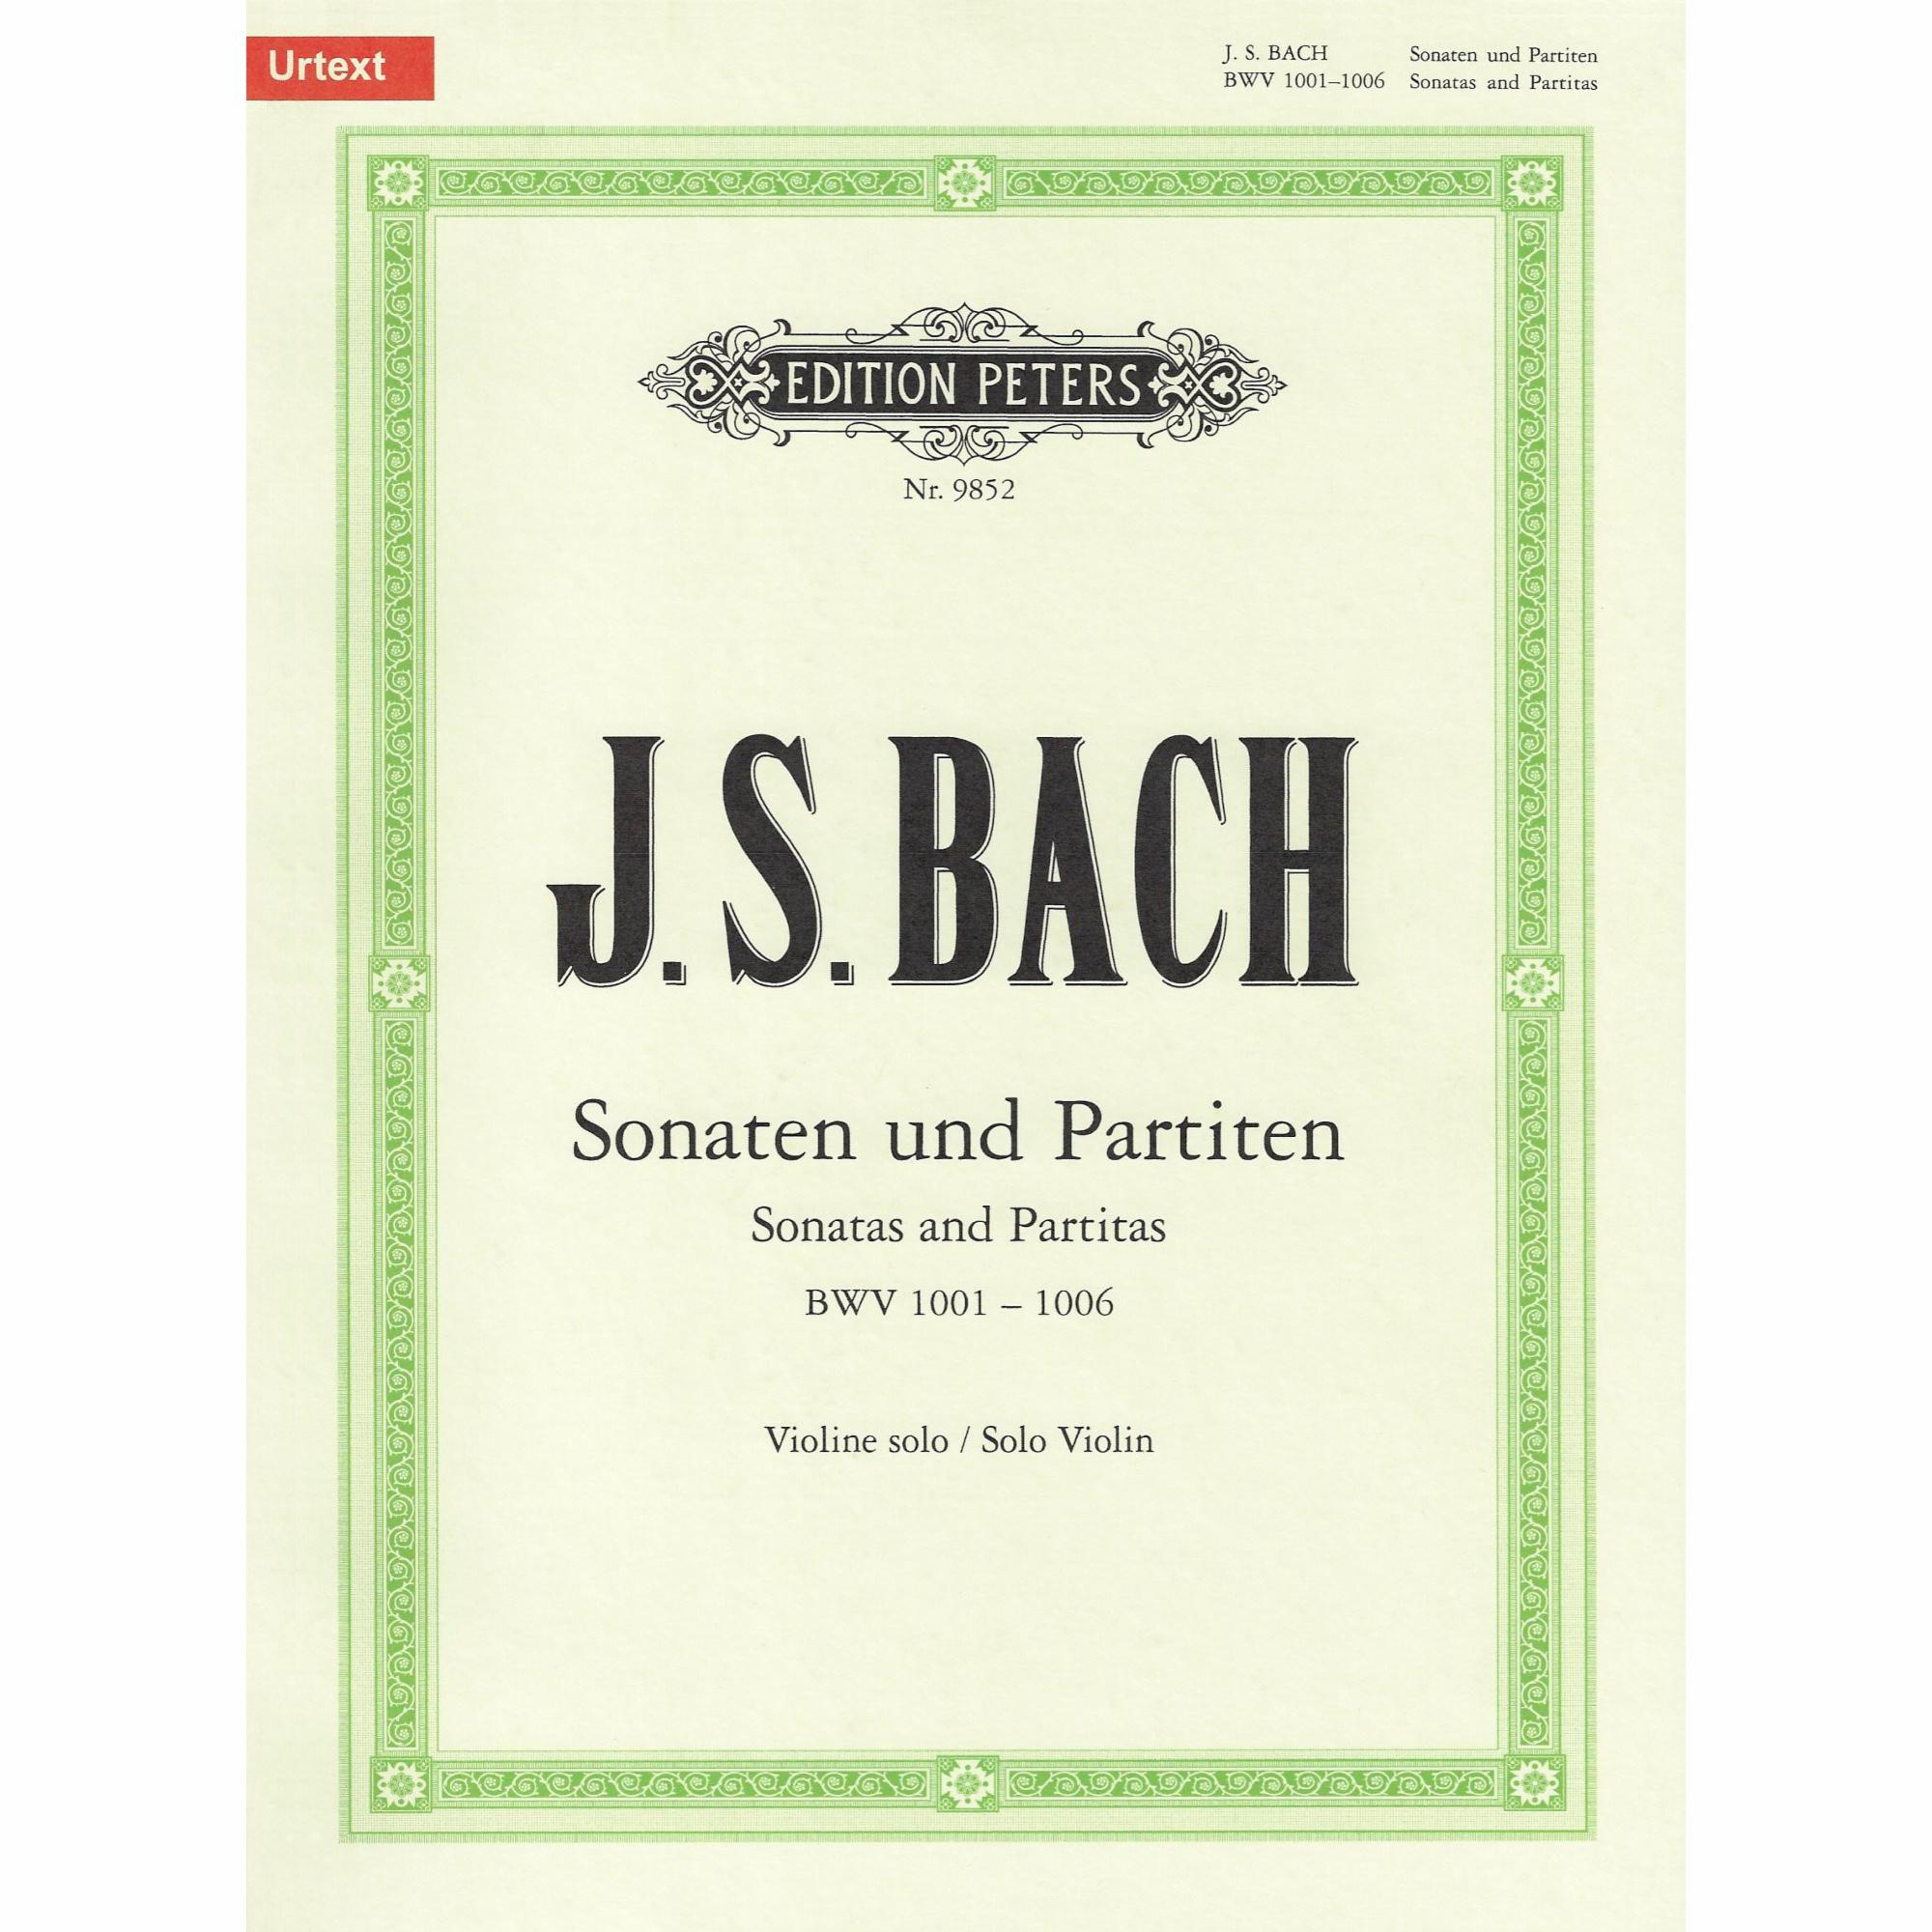 Bach -- Sonatas and Partitas, BWV 1001-1006 for Solo Violin